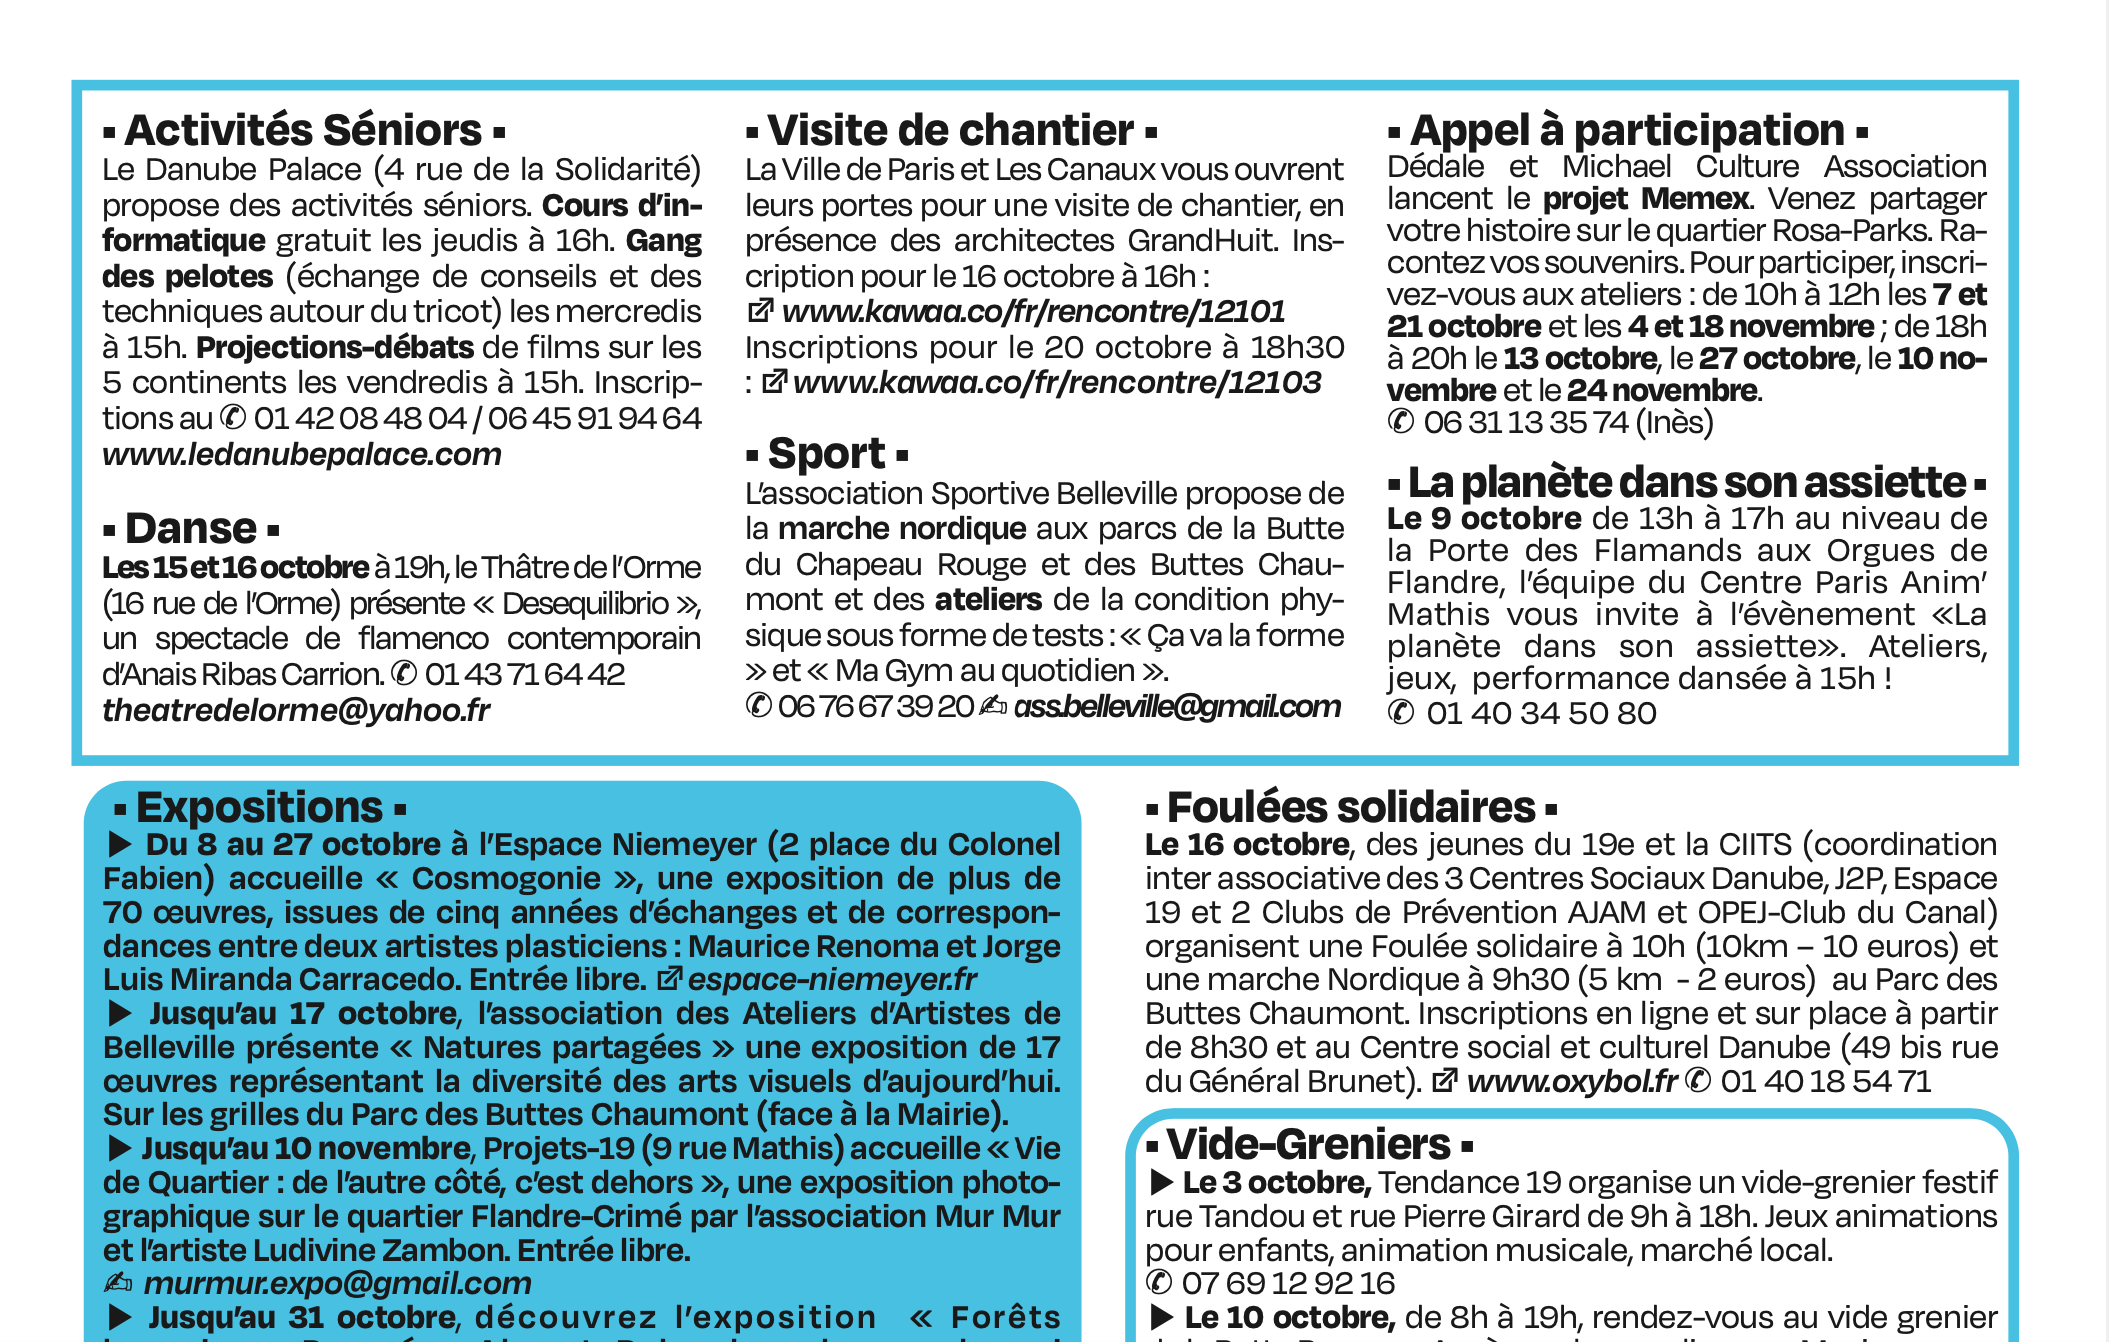 Screen capture of MEMEX article in La Gazette